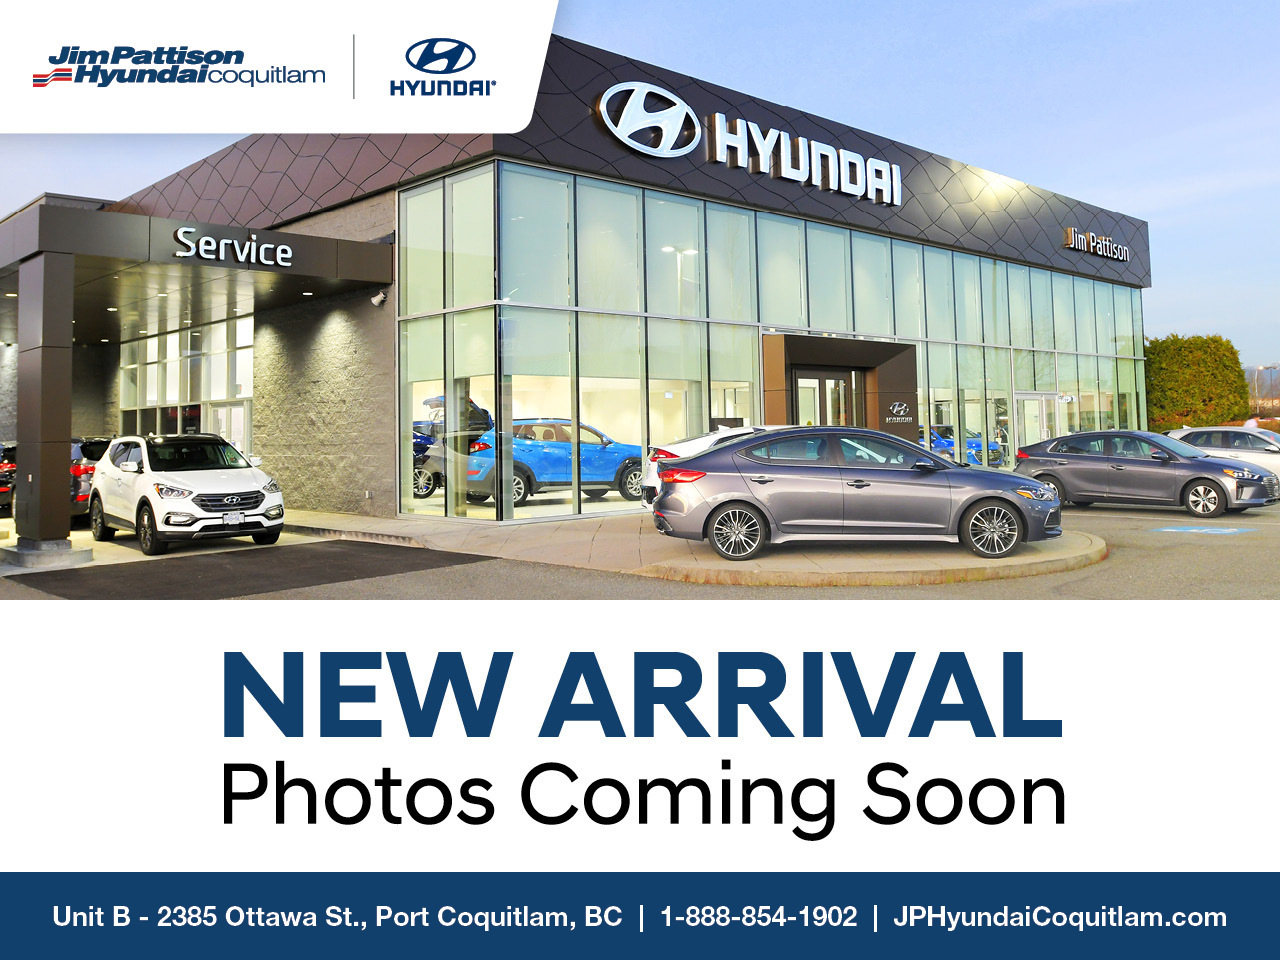 2013 Hyundai Santa Fe AWD 4dr 2.4L Auto Premium -Ltd Avail-